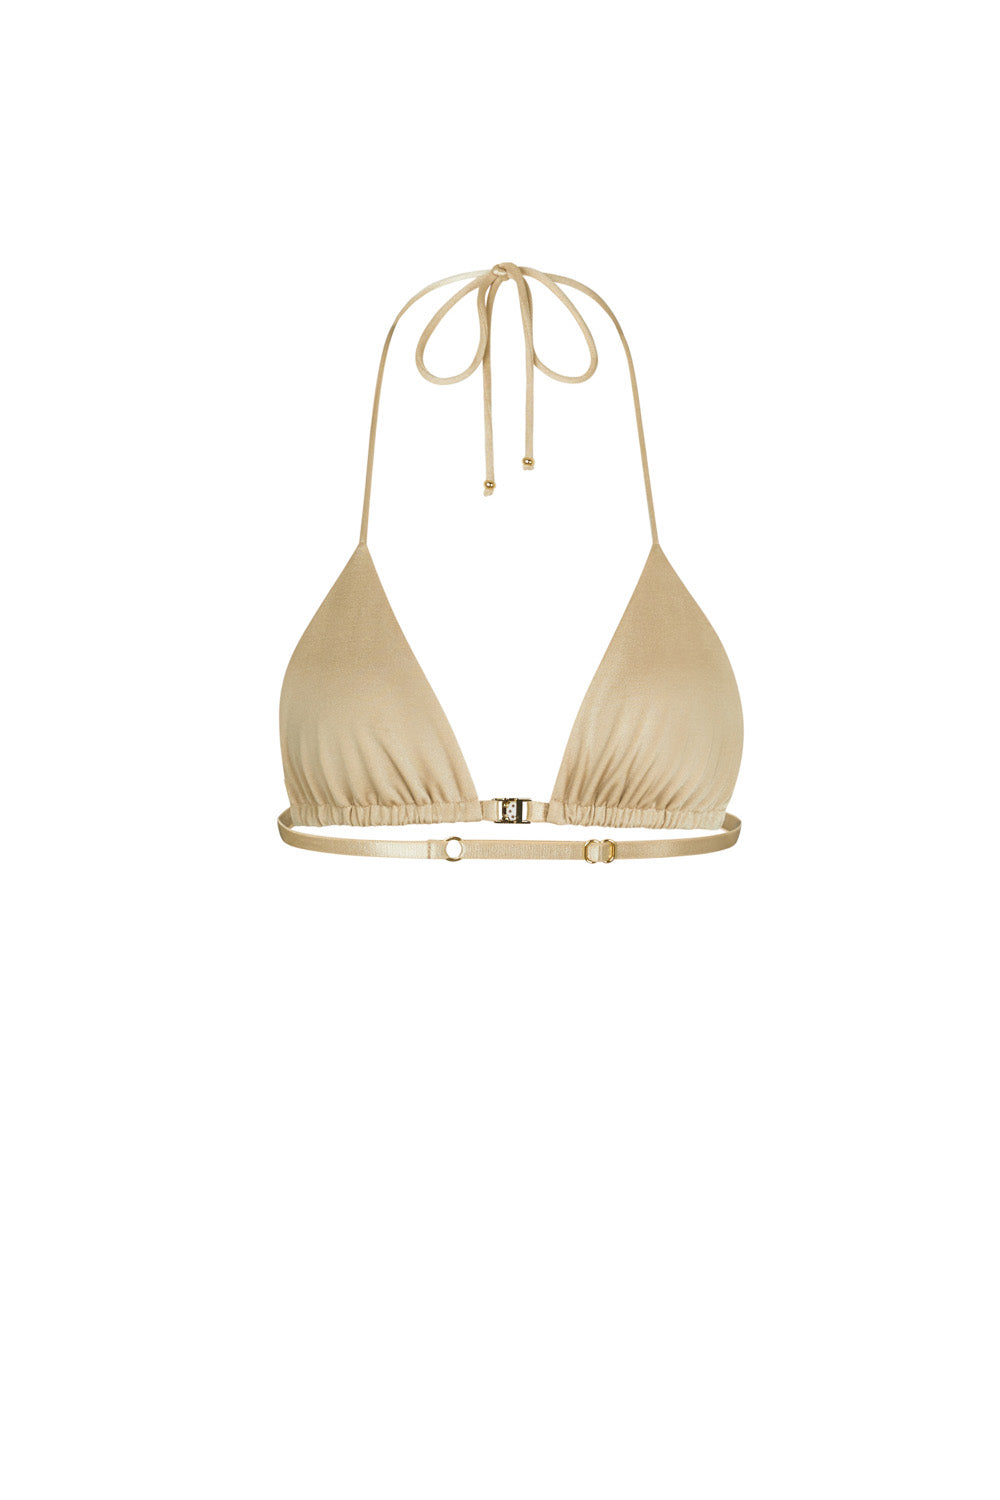 flook the label amari bralette top swimwear gold product image back